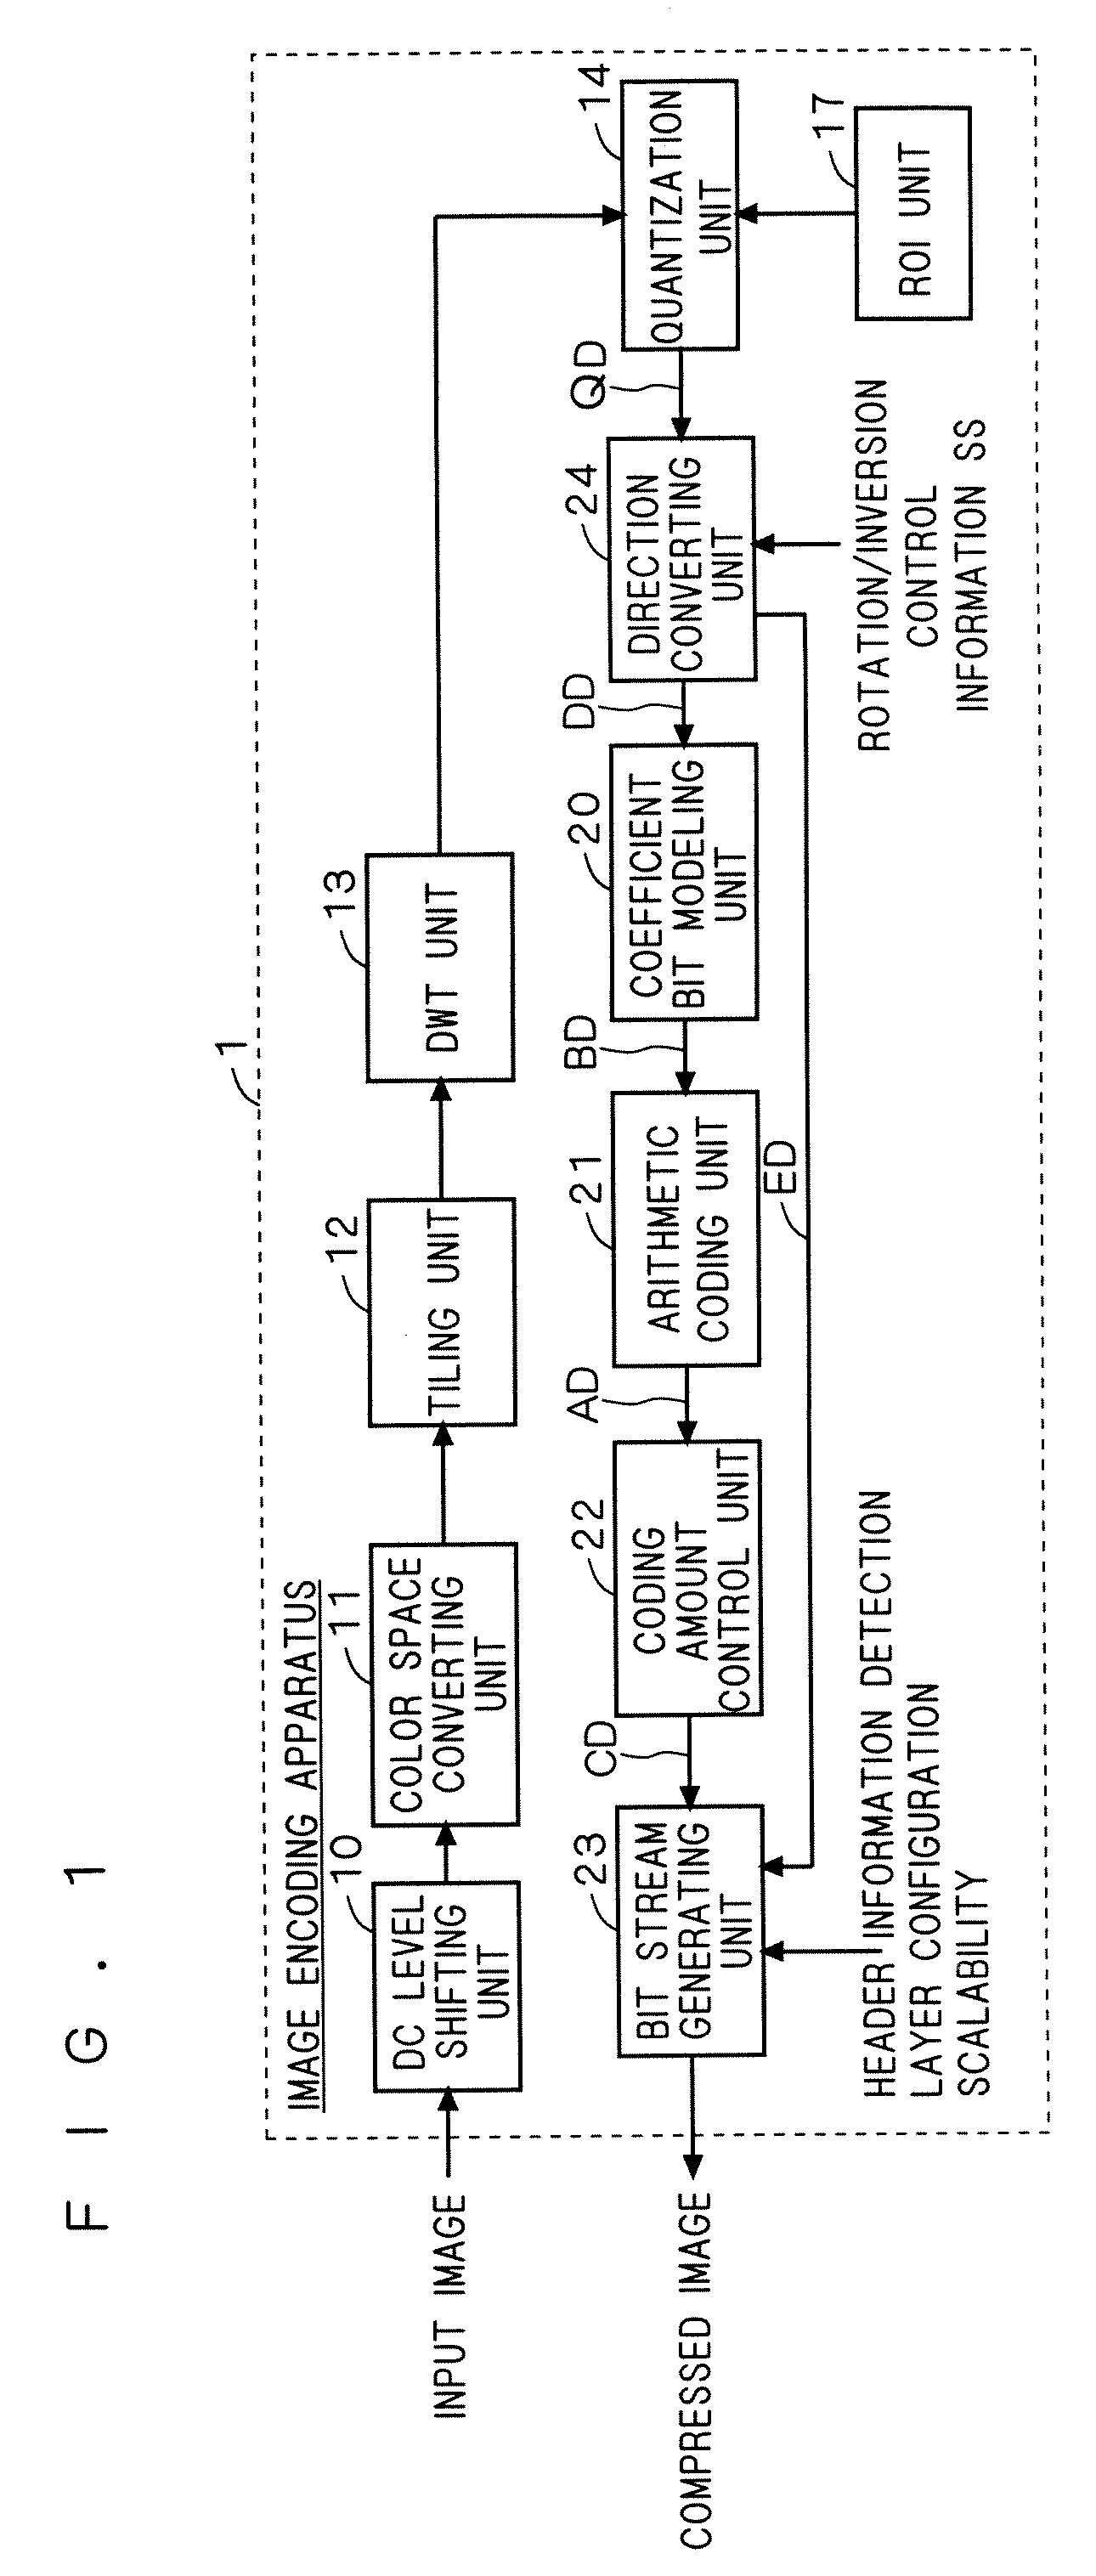 Image encoding apparatus and image decoding apparatus